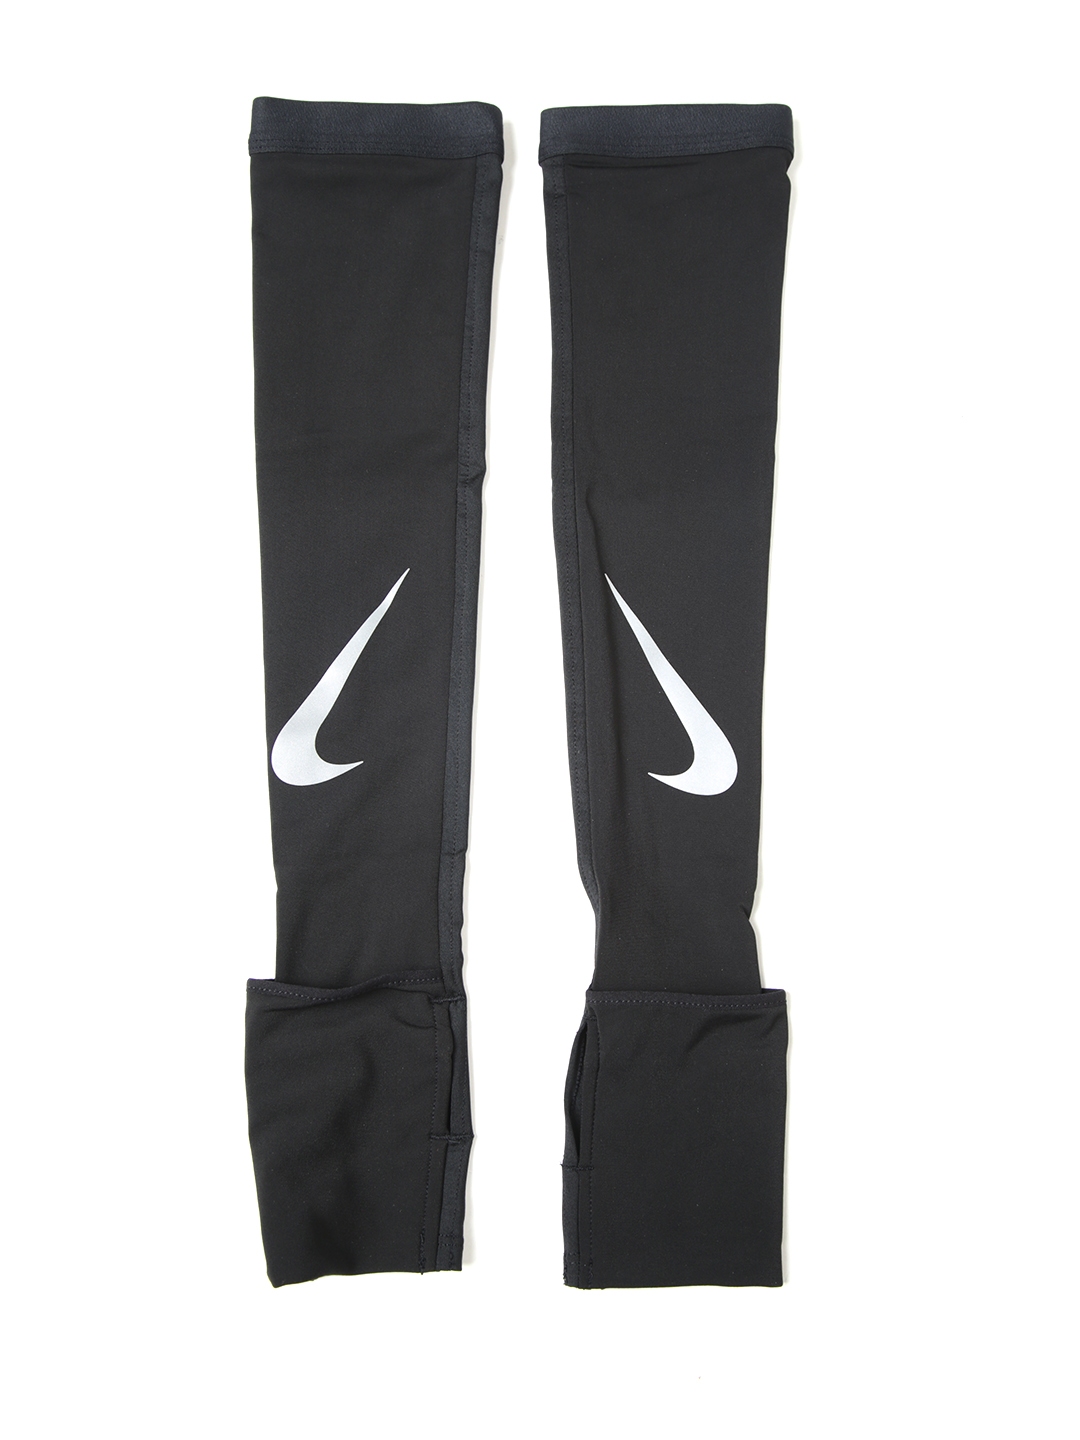 Buy Nike Unisex Black Midweight Dry Running Sleeves - Sports